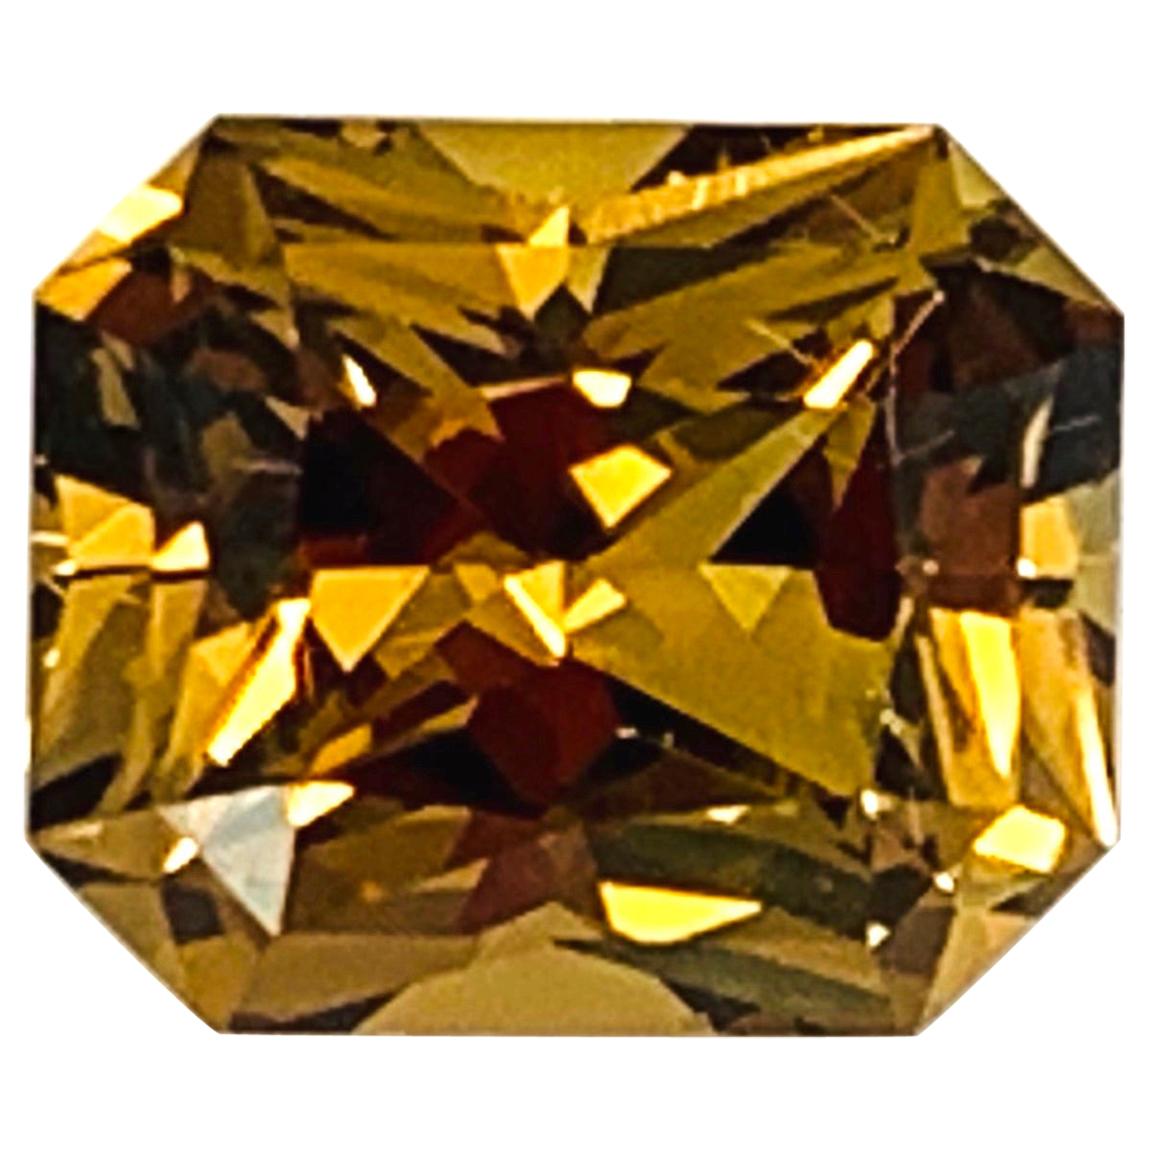 Zircon doré taille octogonale de 6,40 carats, pierre précieuse non sertie